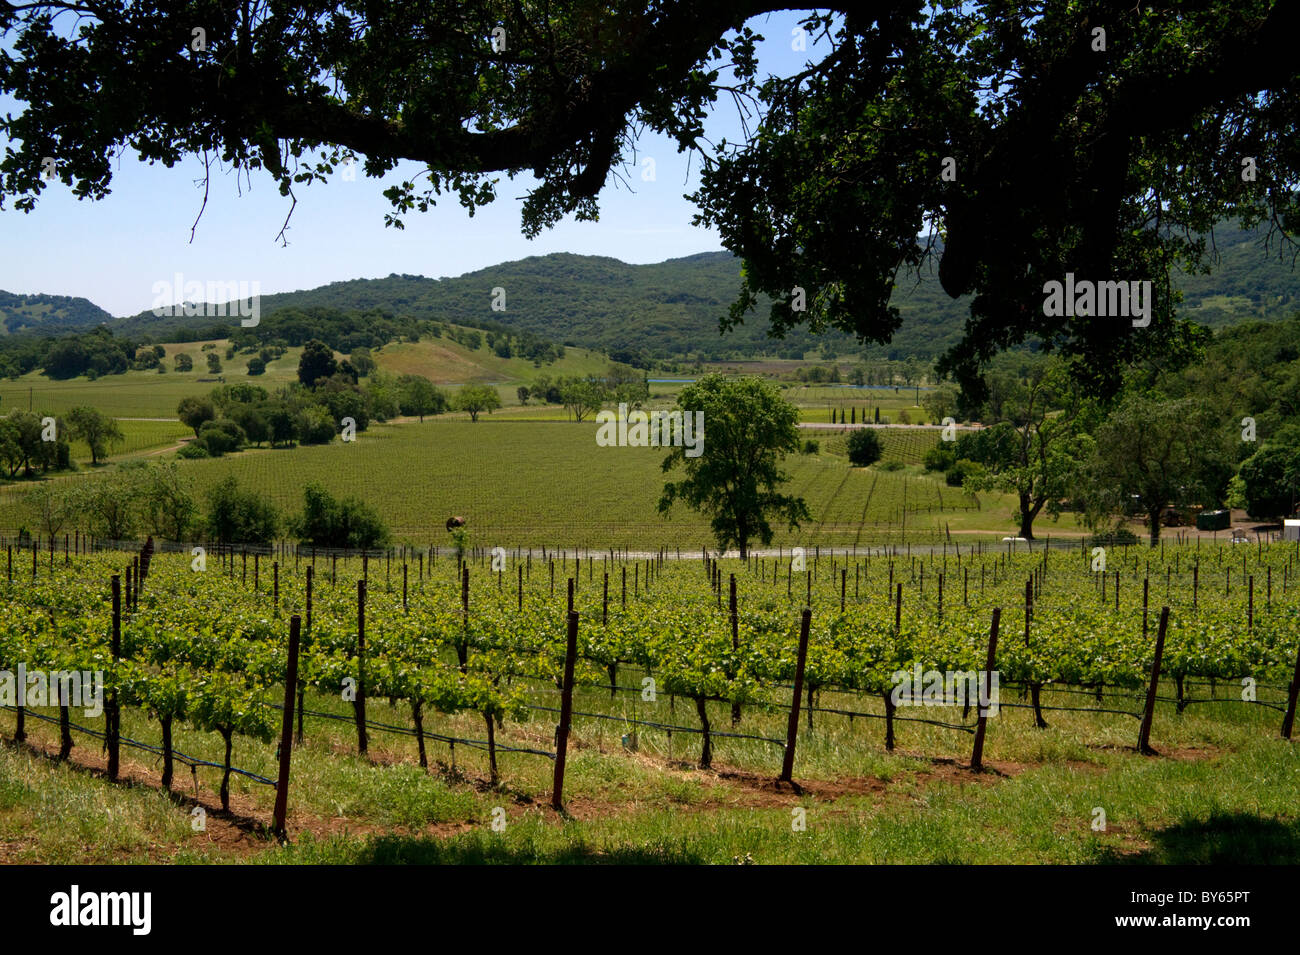 Vineyard in Sonoma Valley, California, USA. Stock Photo